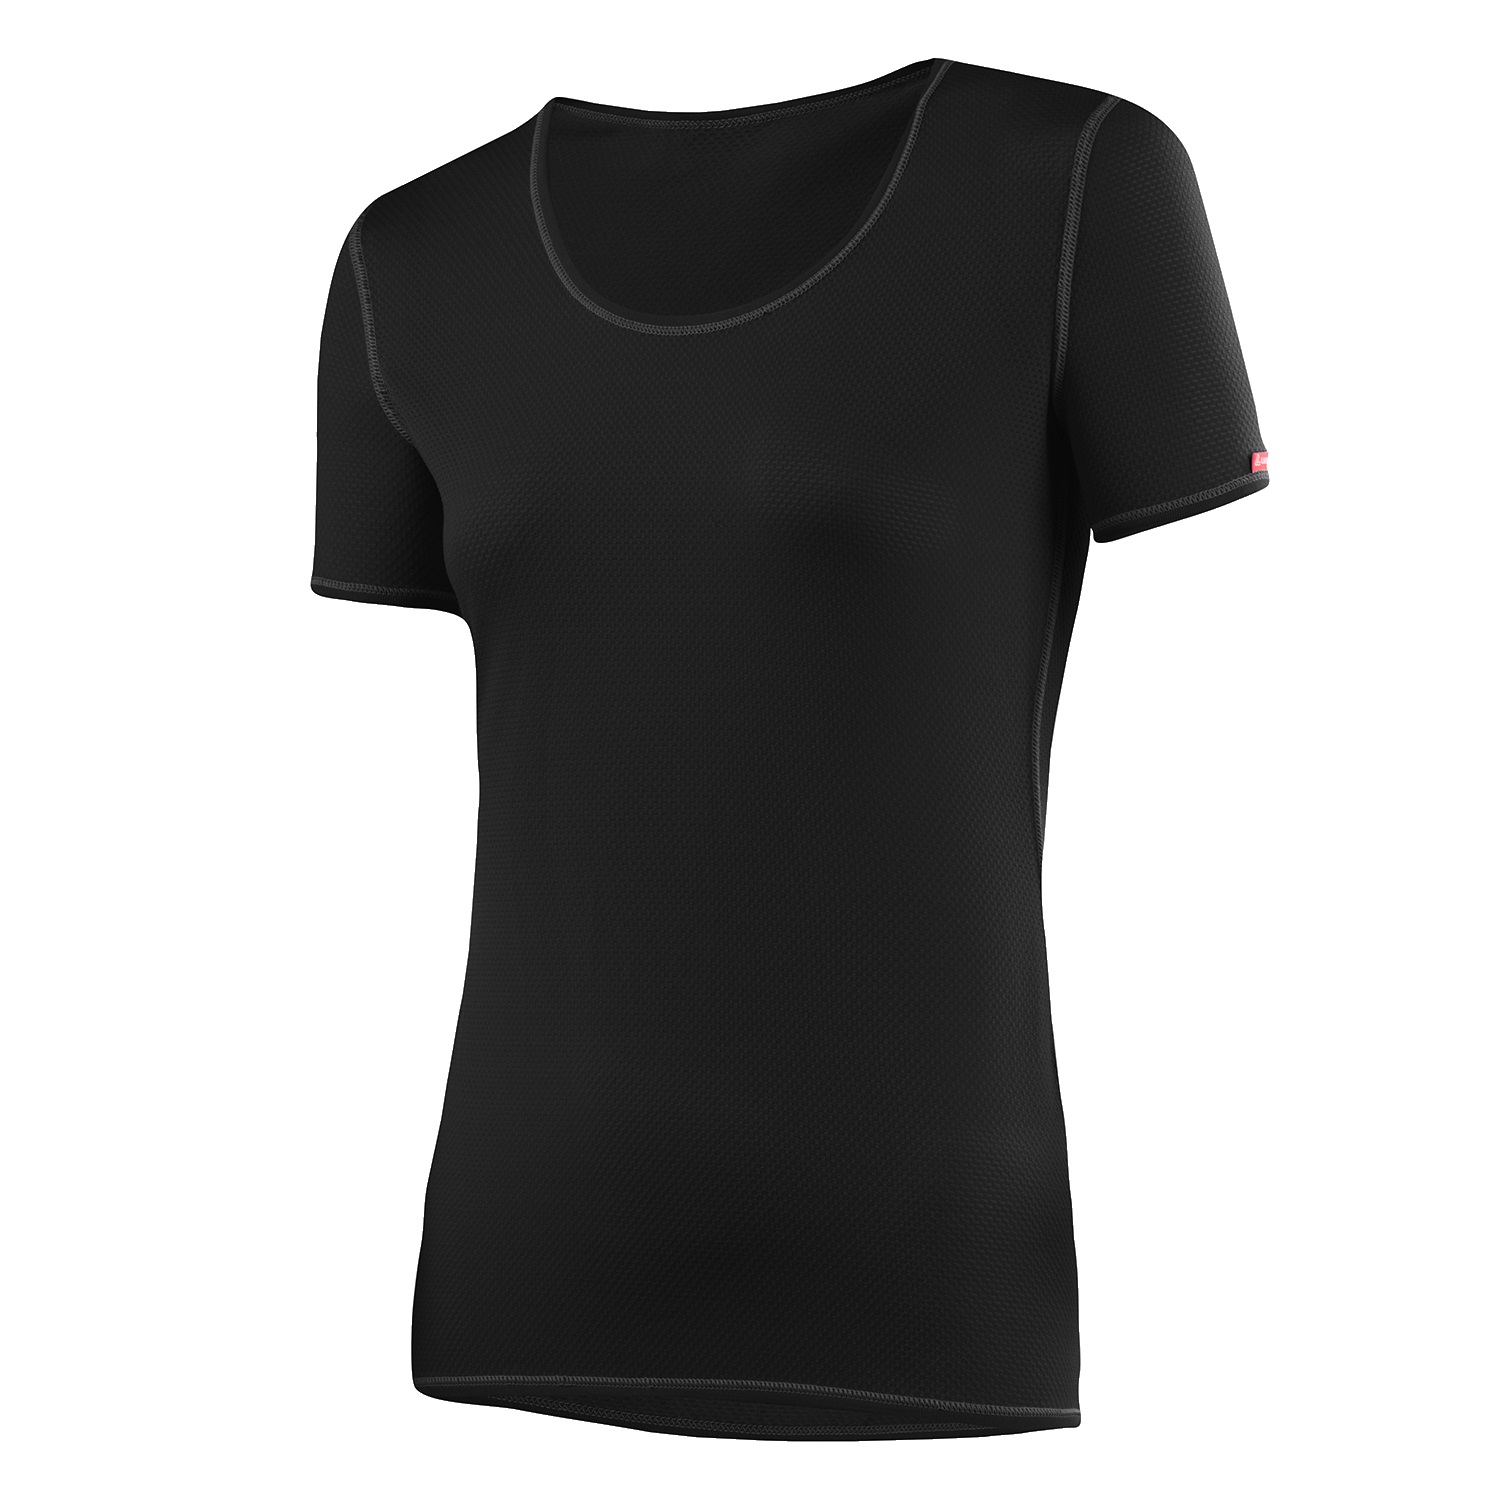 Löffler Shirt S/S Transtex Light Damen Funktionsunterwäsche schwarz